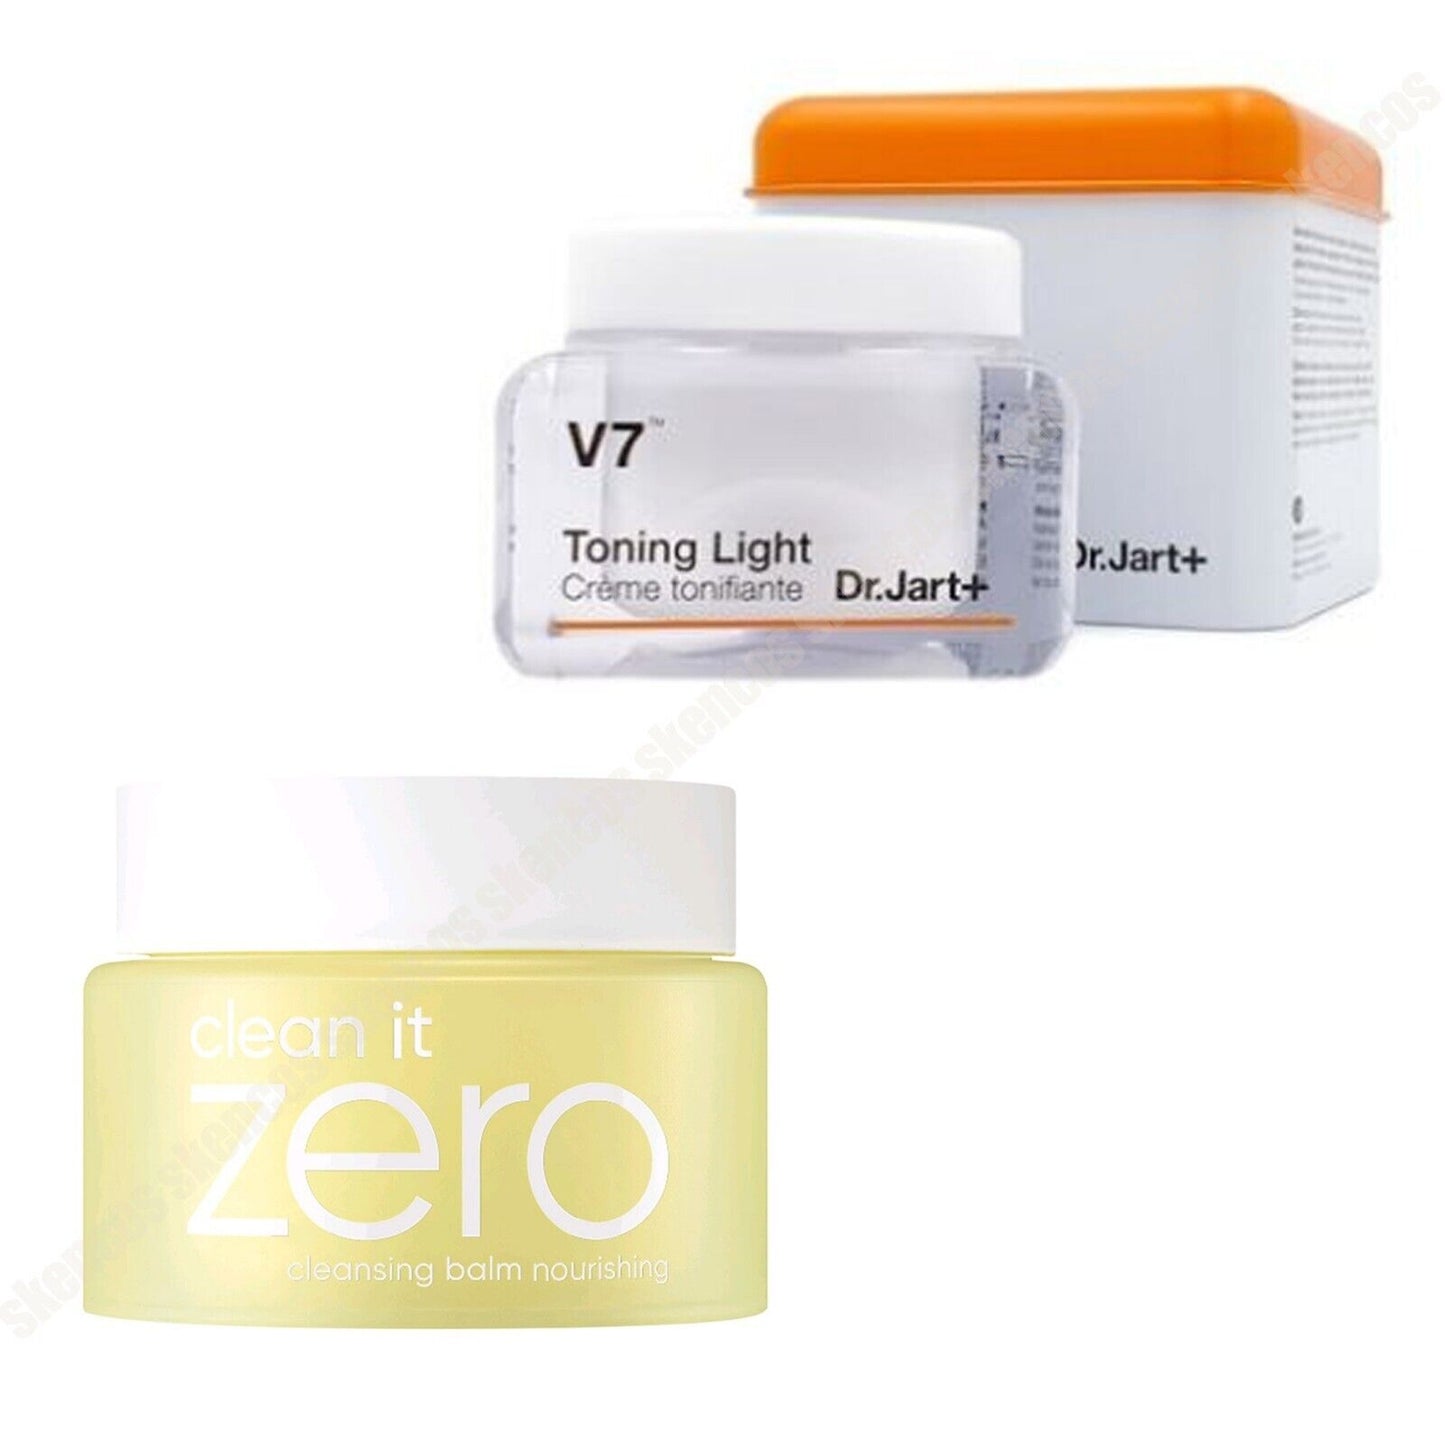 Dr.jart V7 Toning Light Brightening Cream 50ml+Banila Co. Cleansing Balm 100m